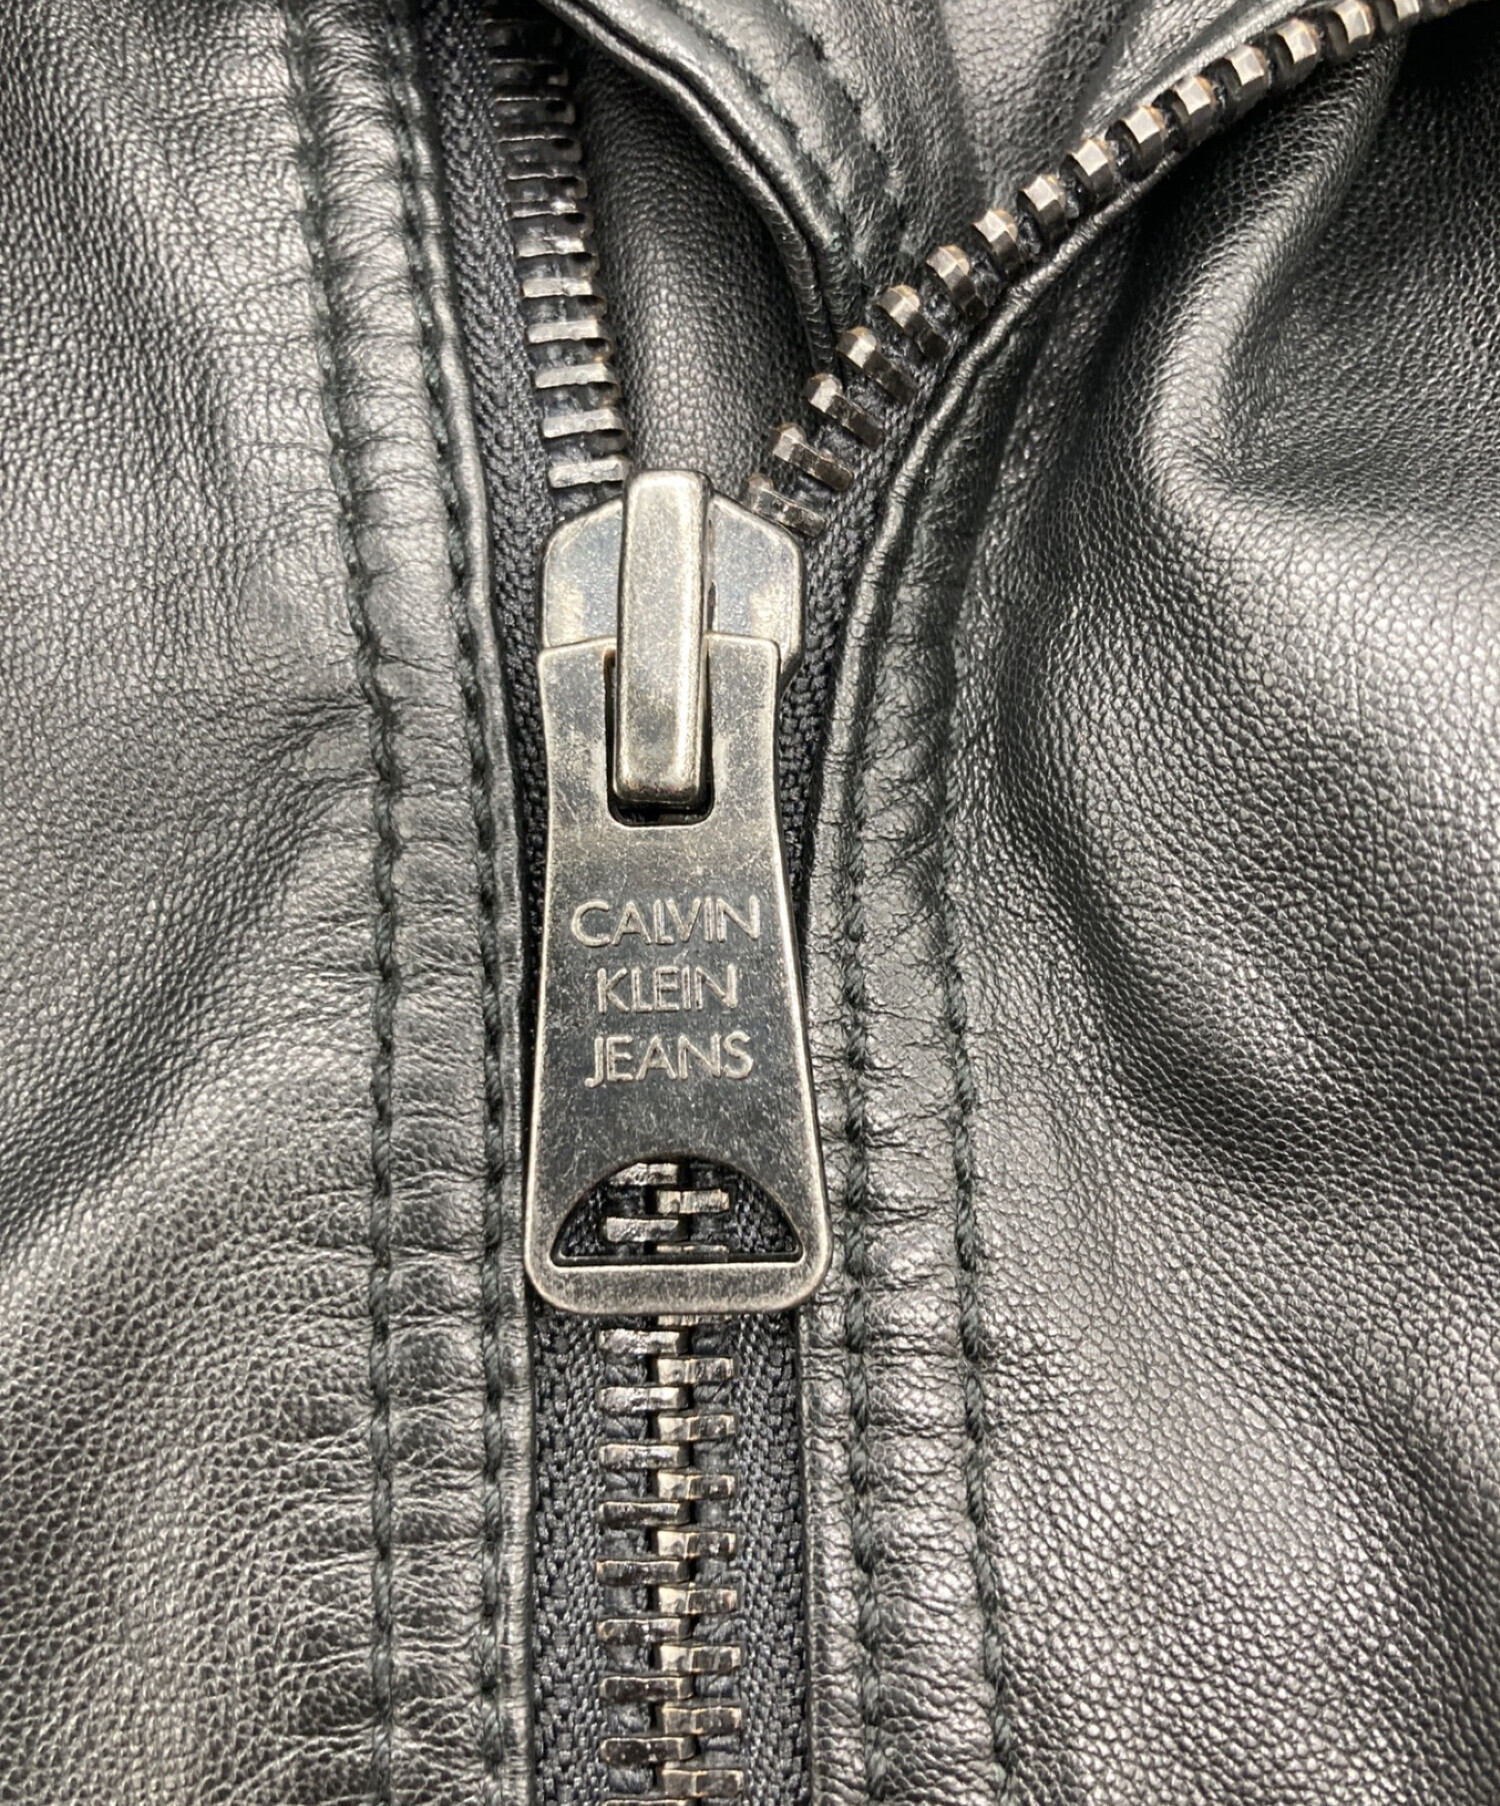 Calvin Klein Jeans (カルバンクラインジーンズ) ラムレザーライダースジャケット ブラック サイズ:S